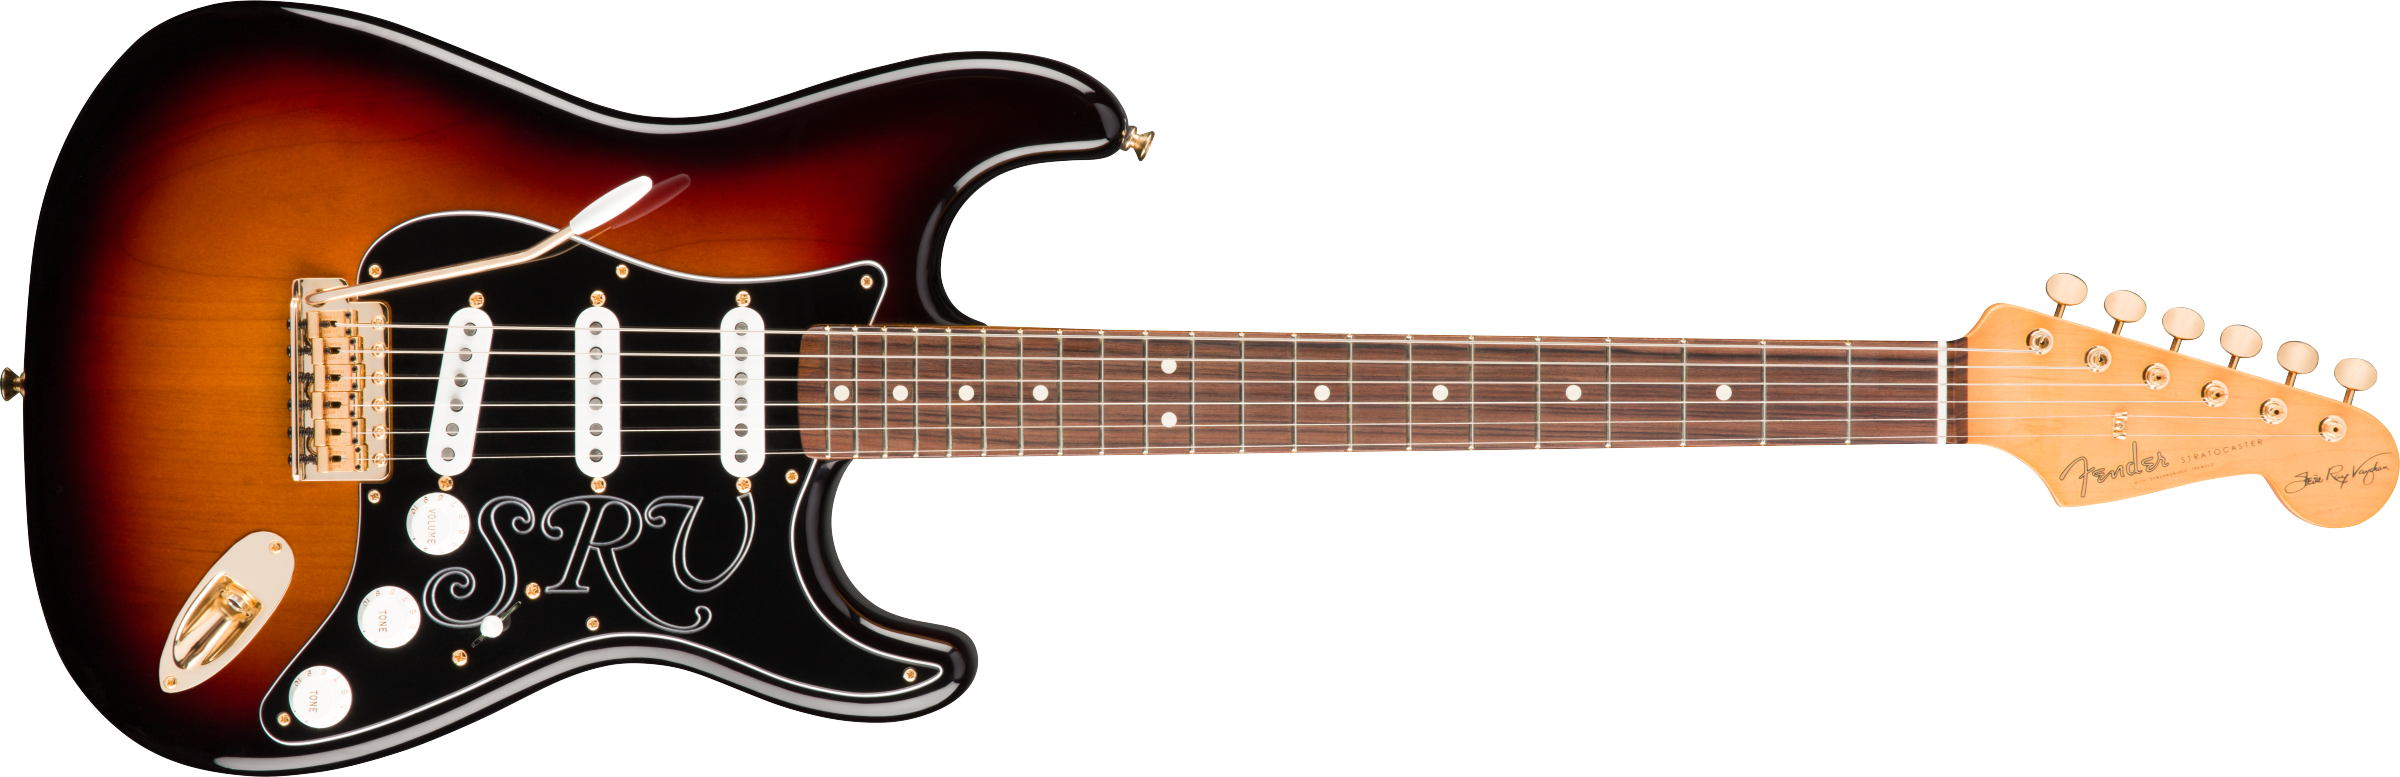 FENDER - Stevie Ray Vaughan Signature Stratocaster